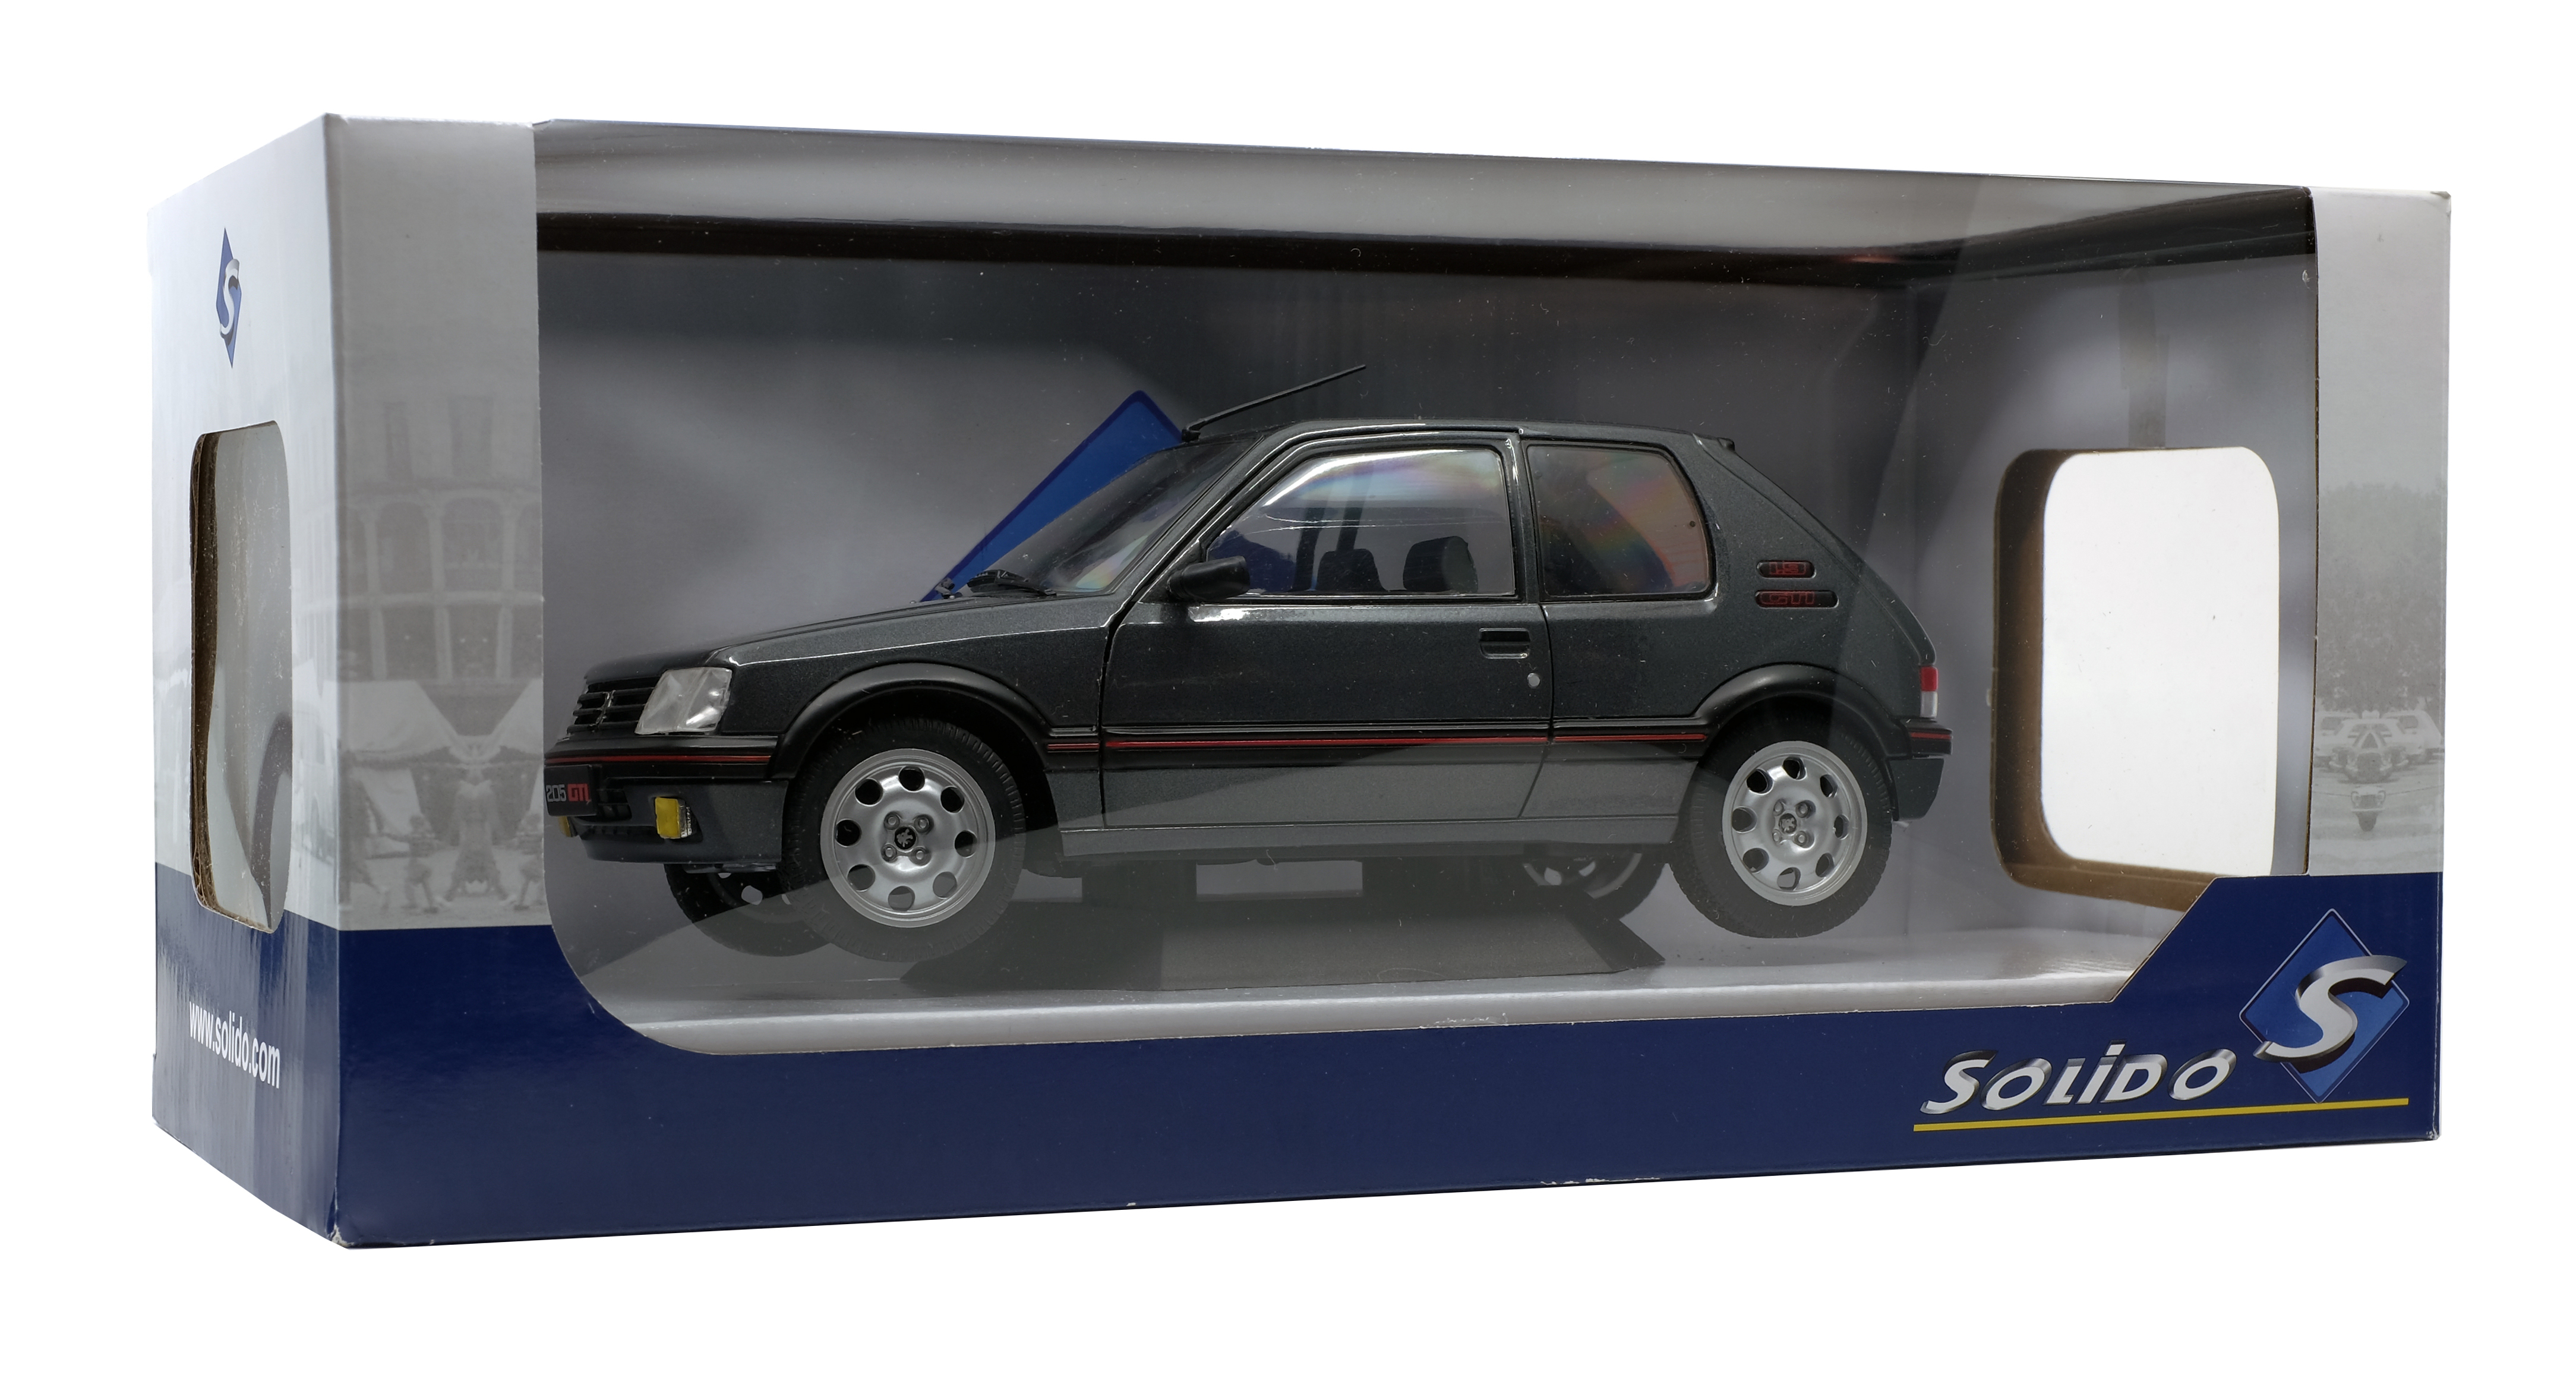 Miniature : Peugeot 205 GTI Solido 1/18